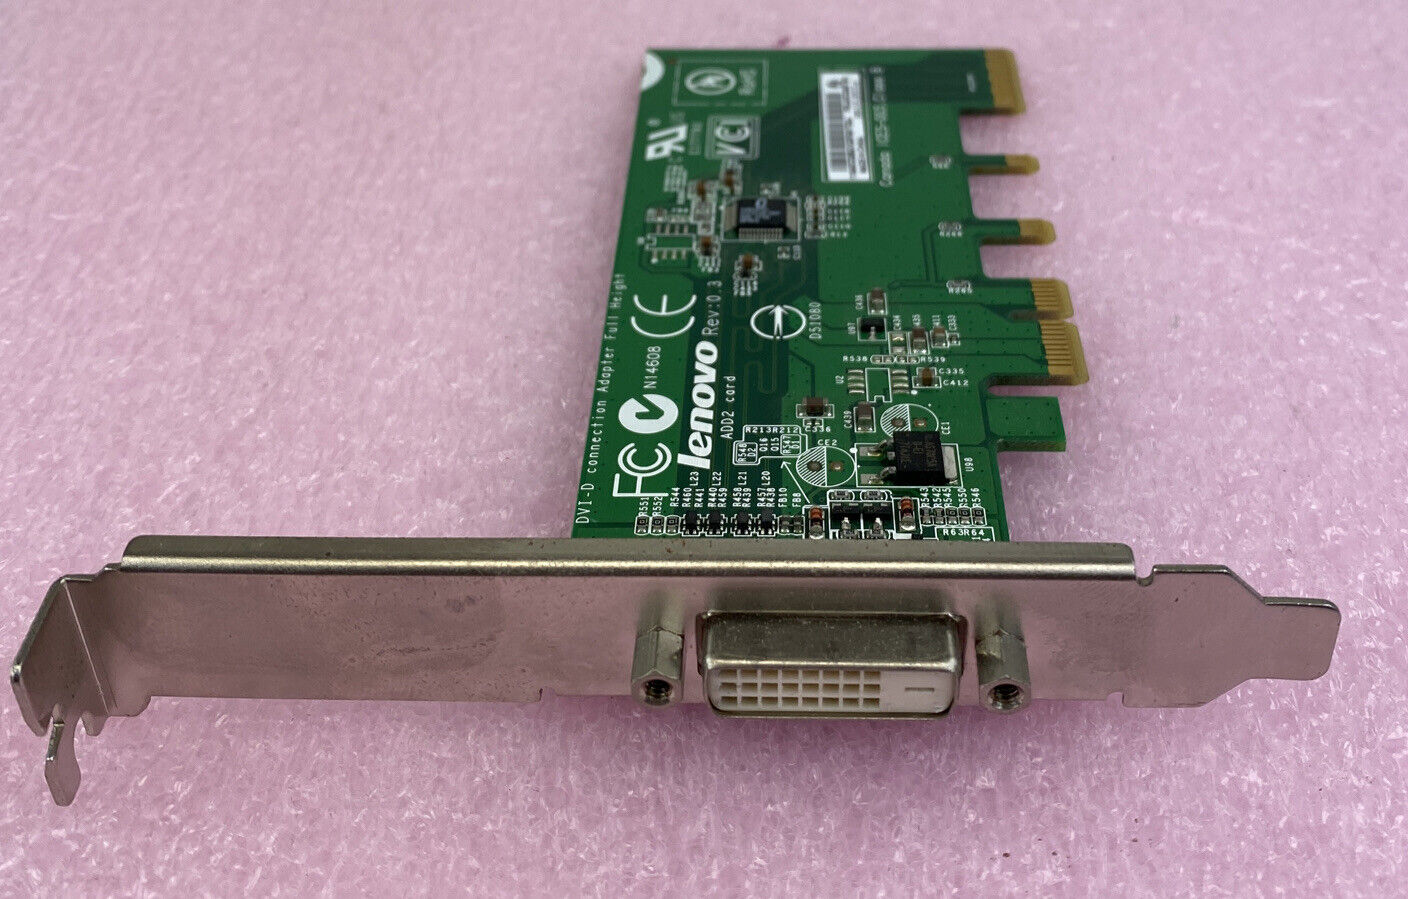 Lenovo FRU 43C0258 DVI-D ADD2 Full Height PCIe card